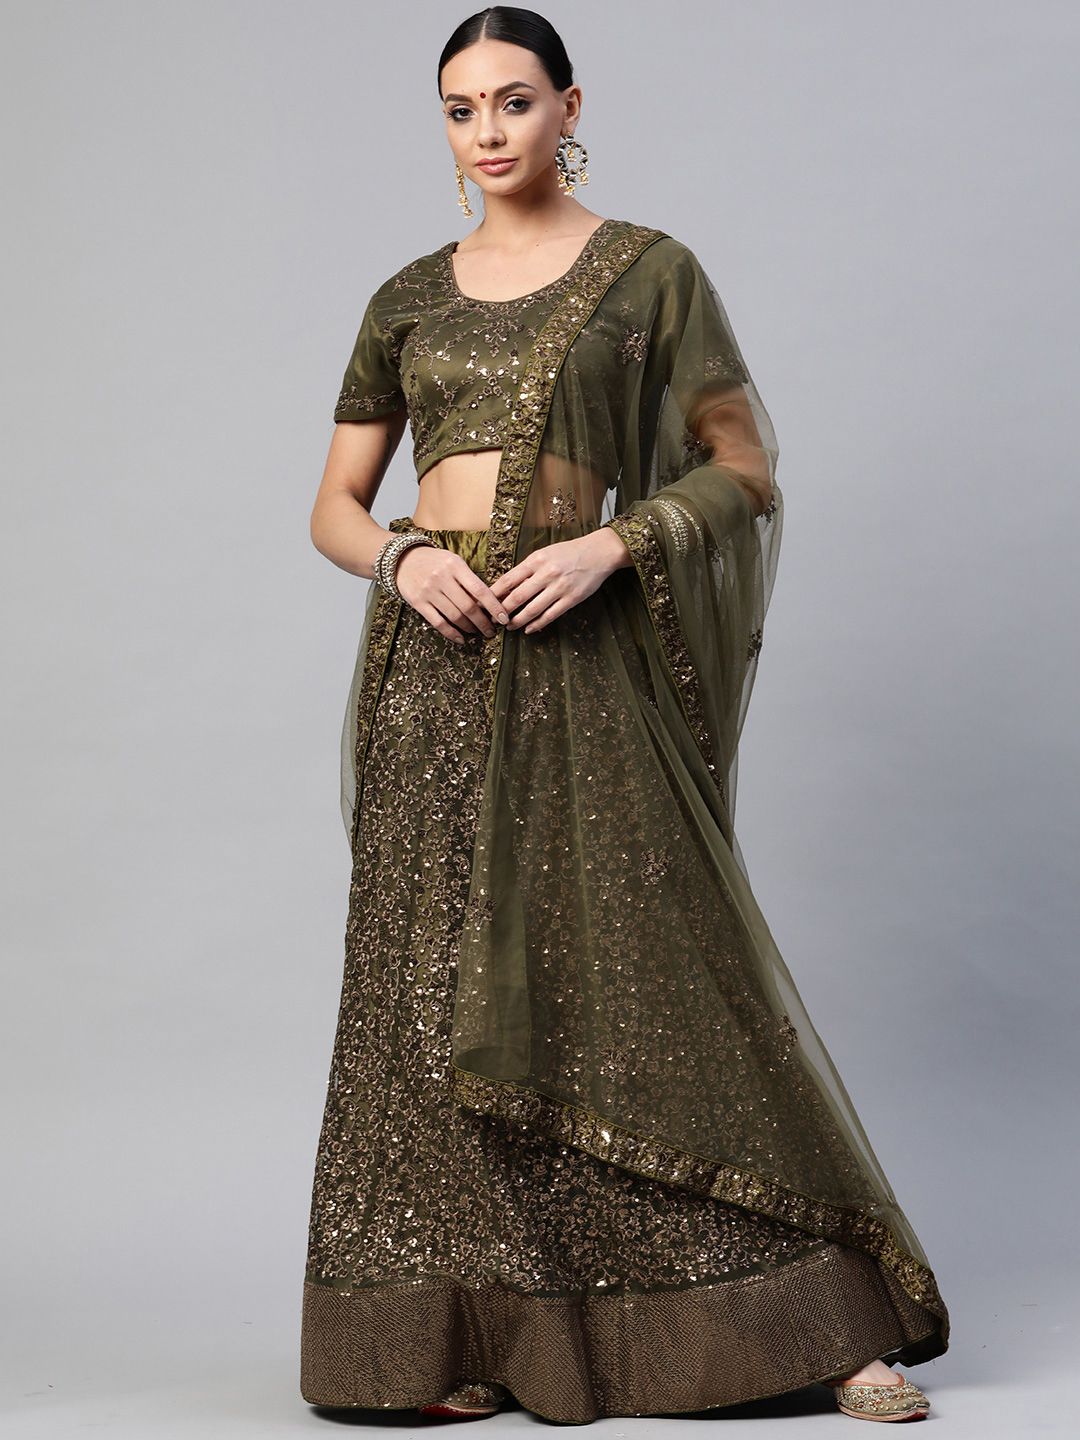 Readiprint Fashions Women Olive Green Semi-Stitched Lehenga & Unstitched Blouse & Dupatta Price in India